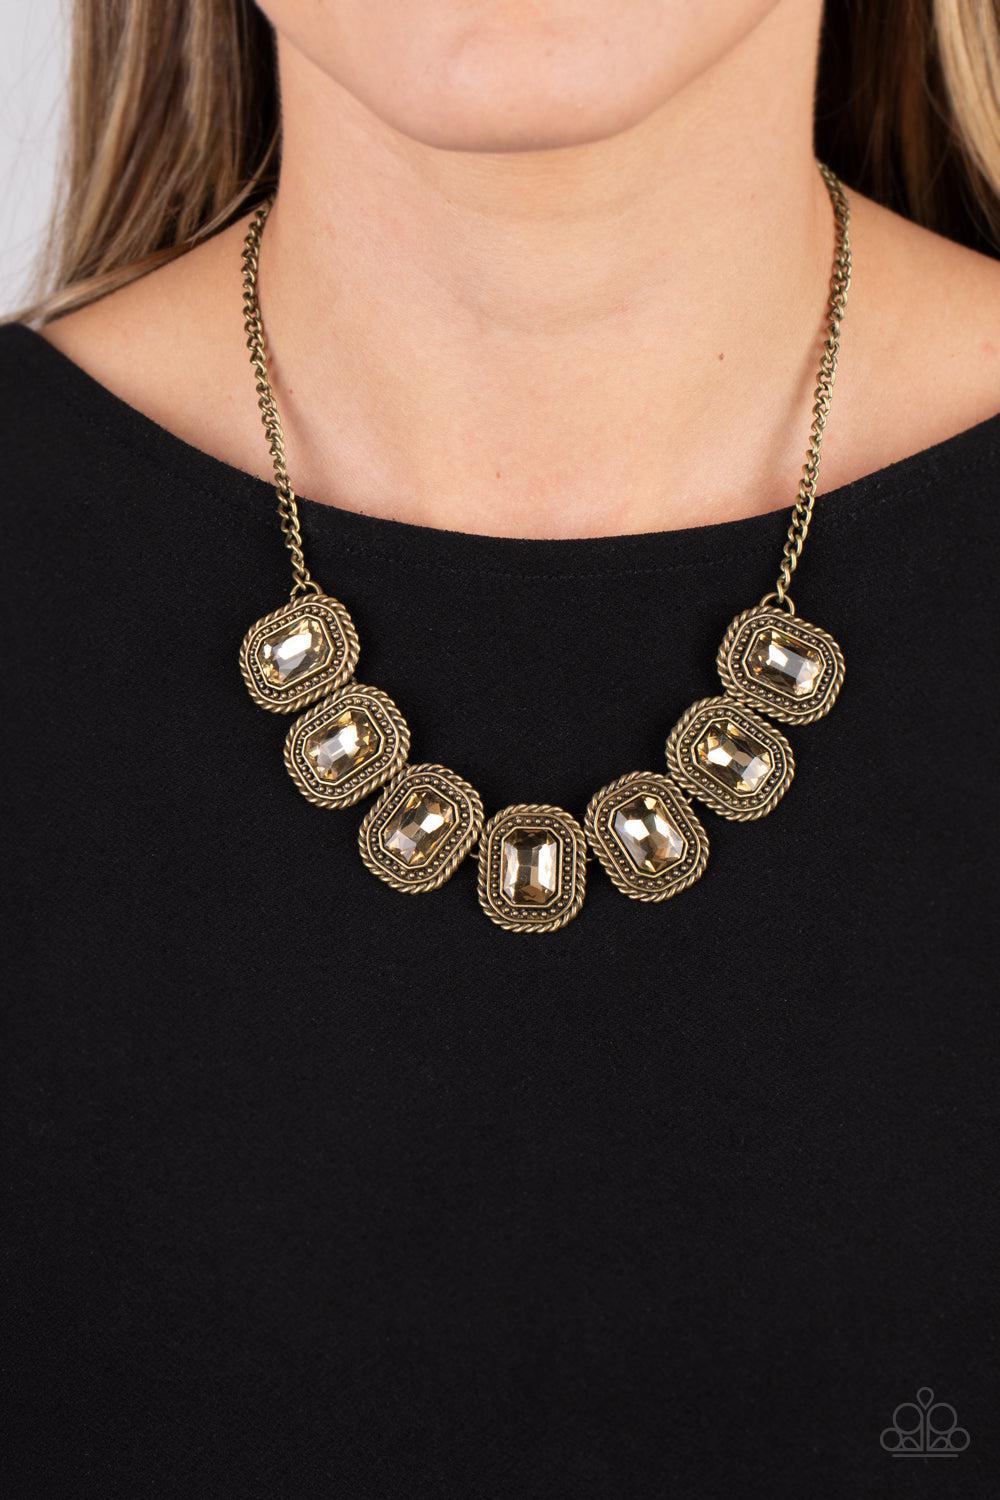 Iced Iron Brass Rhinestone Necklace - Paparazzi Accessories- lightbox - CarasShop.com - $5 Jewelry by Cara Jewels